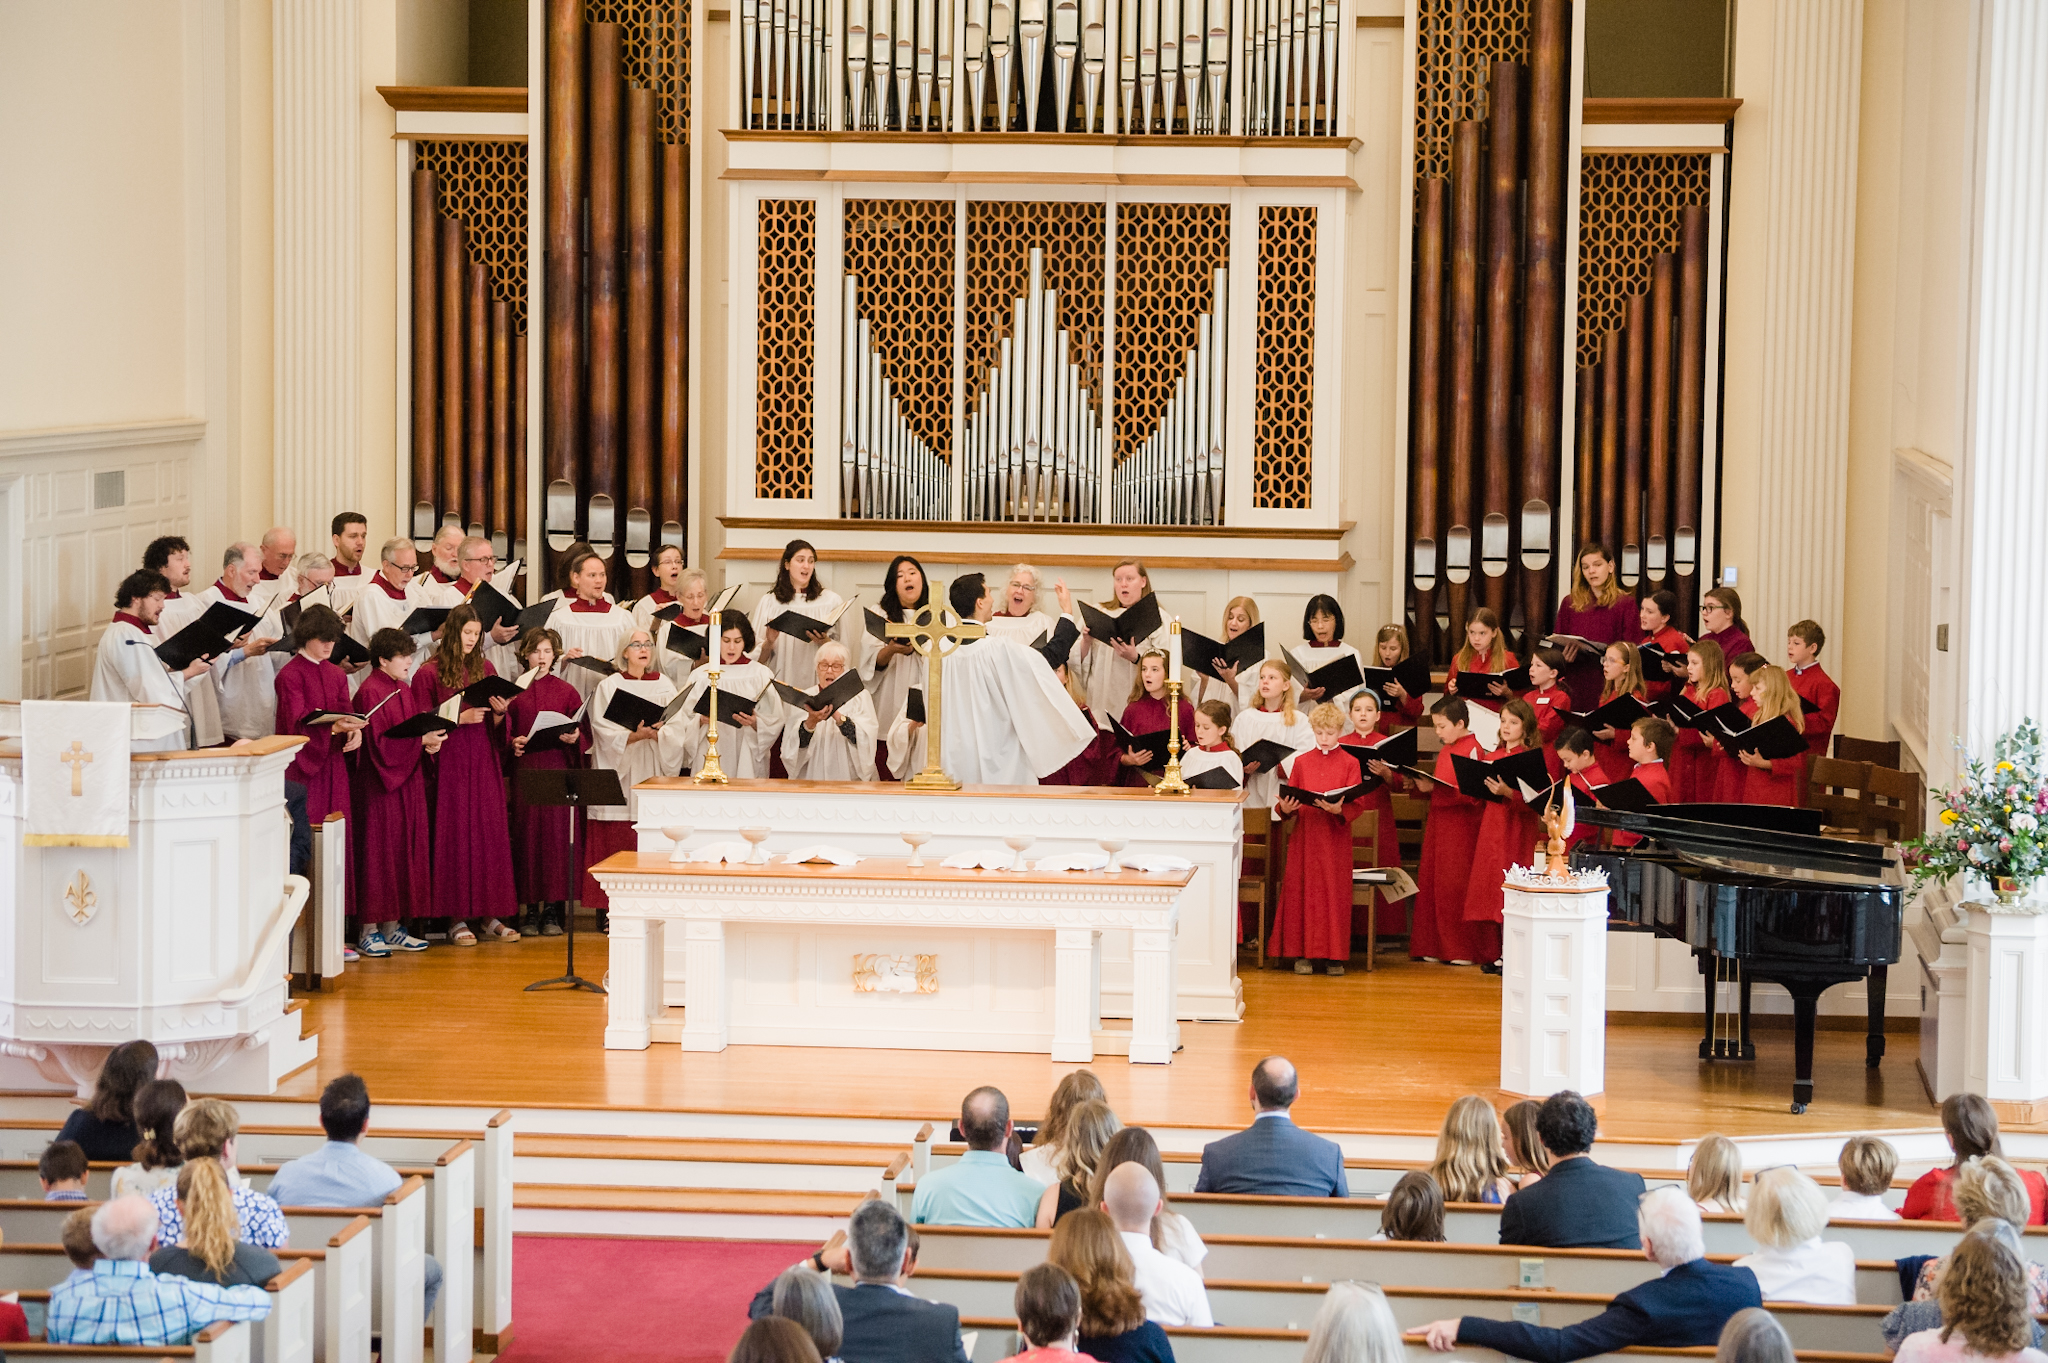 Chancel Choir singing in the sanctuary